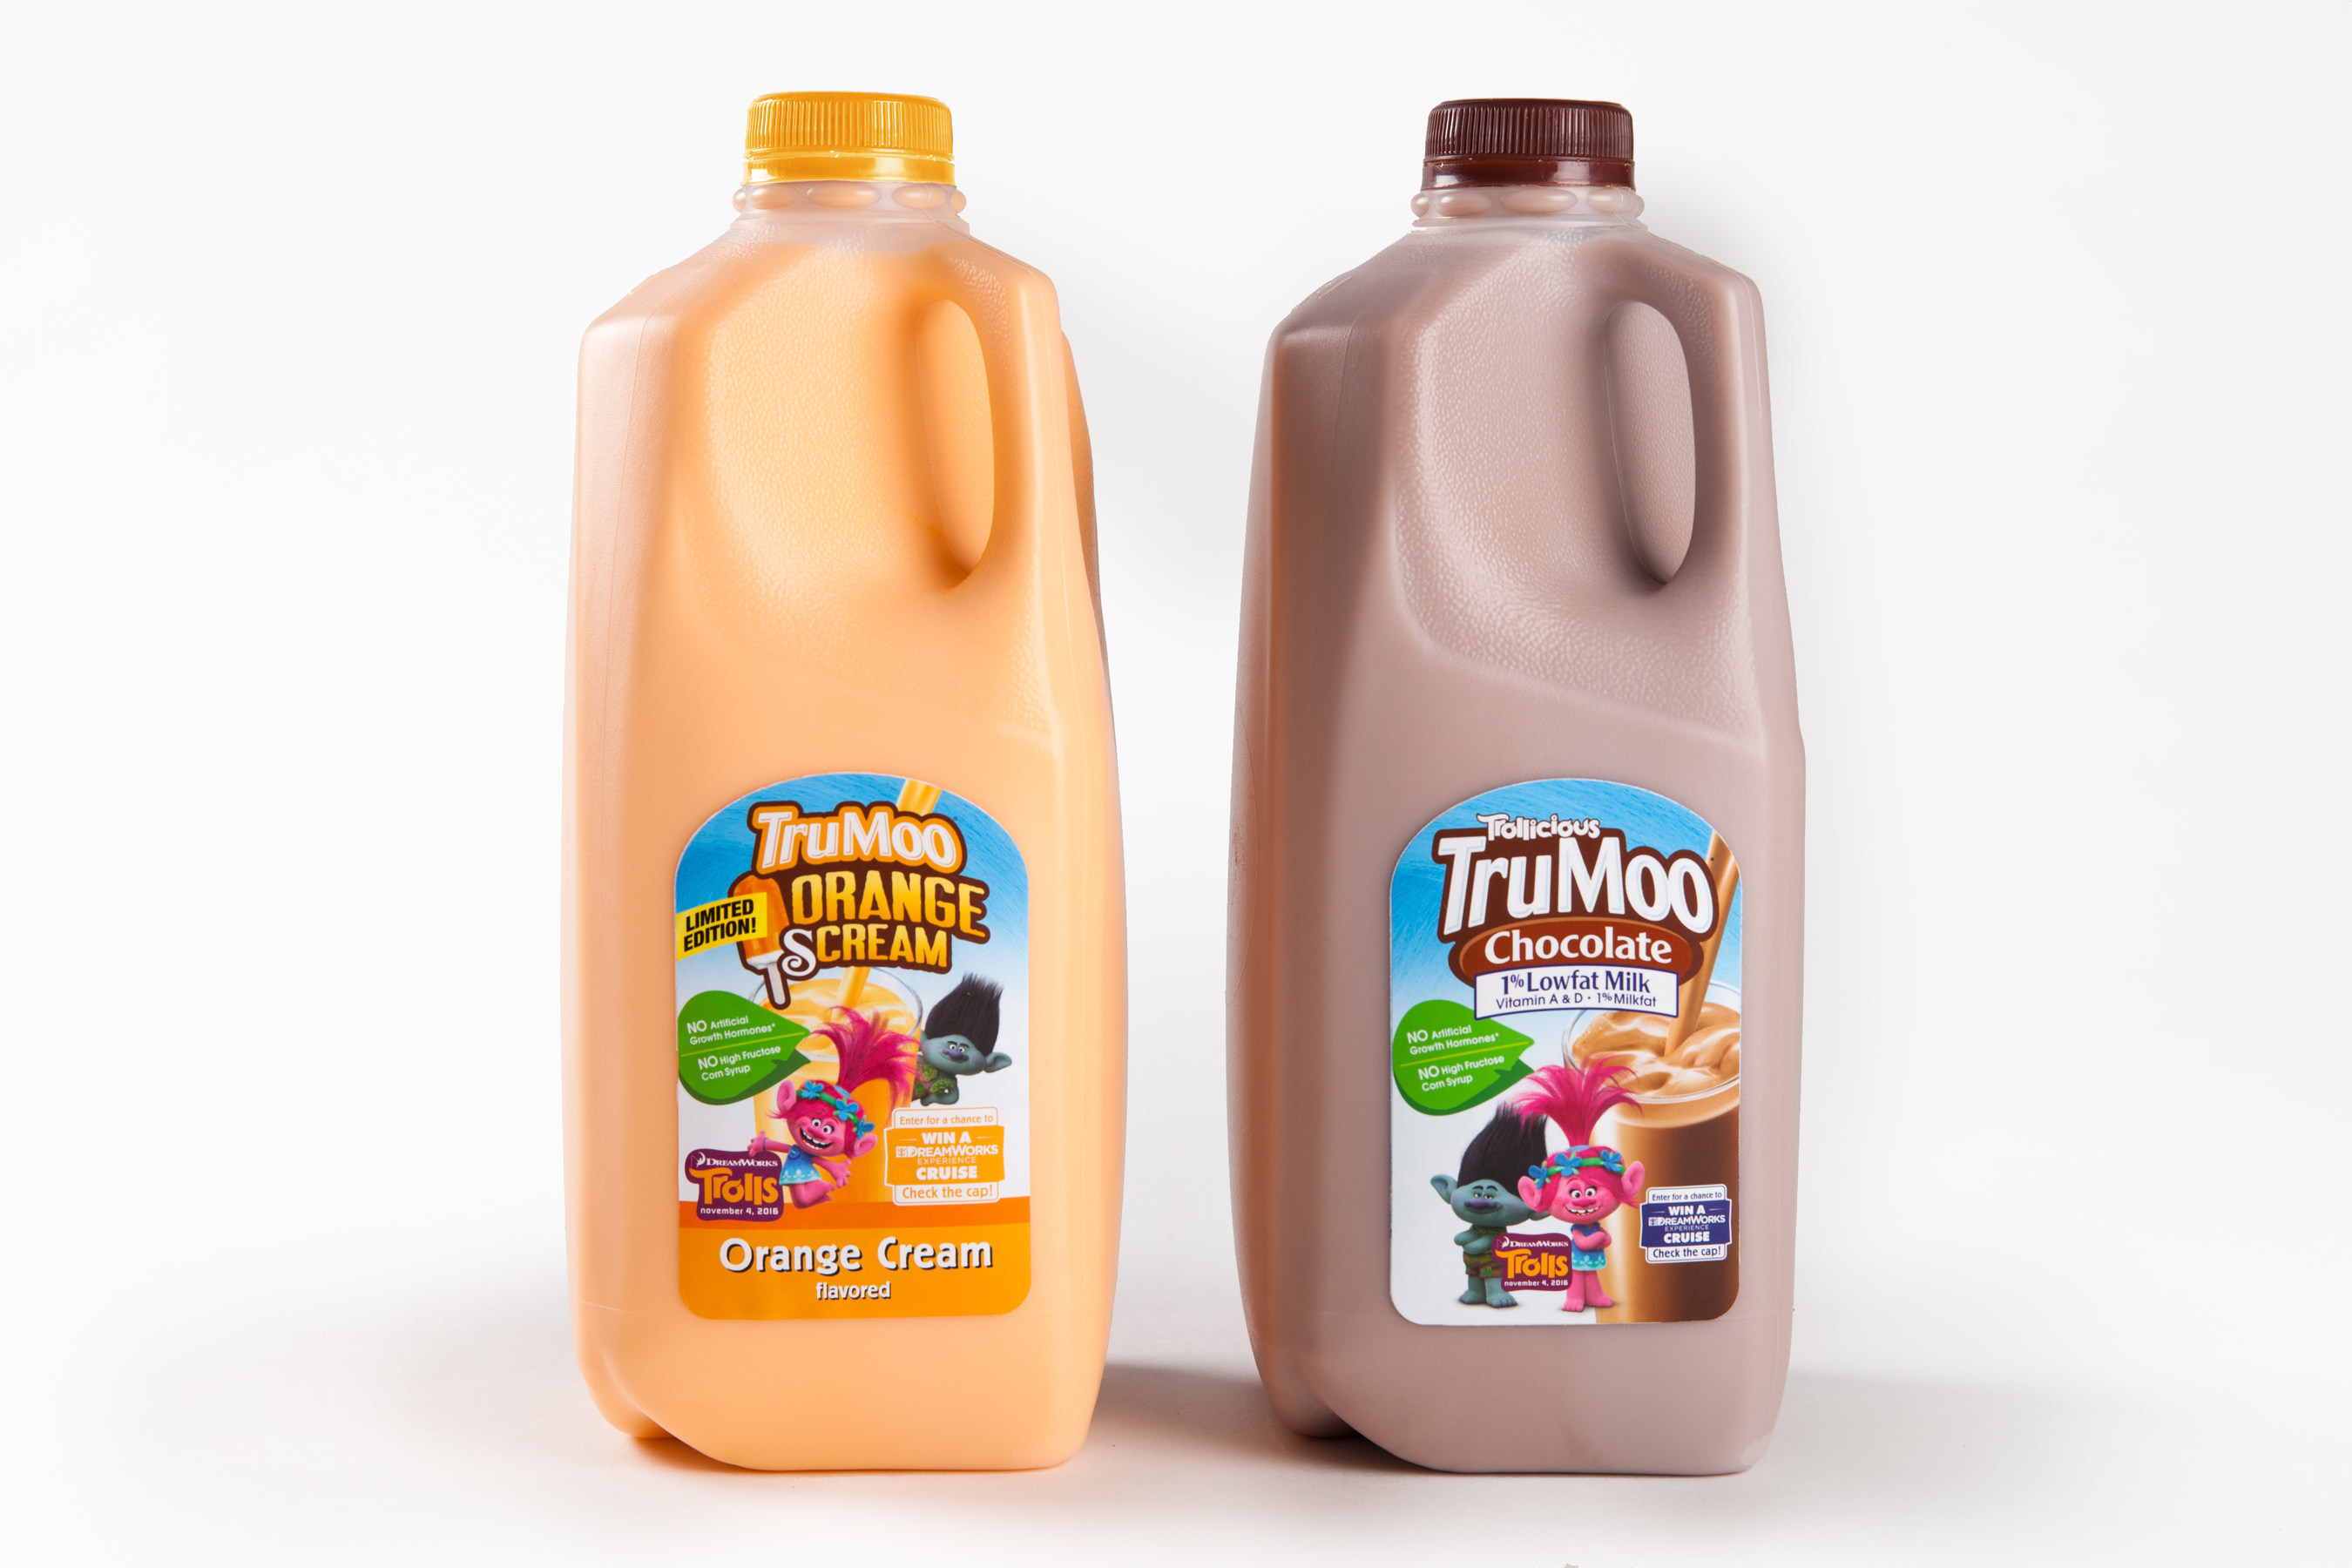 TruMoo Chocolate and limited-edition TruMoo Orange Scream milk